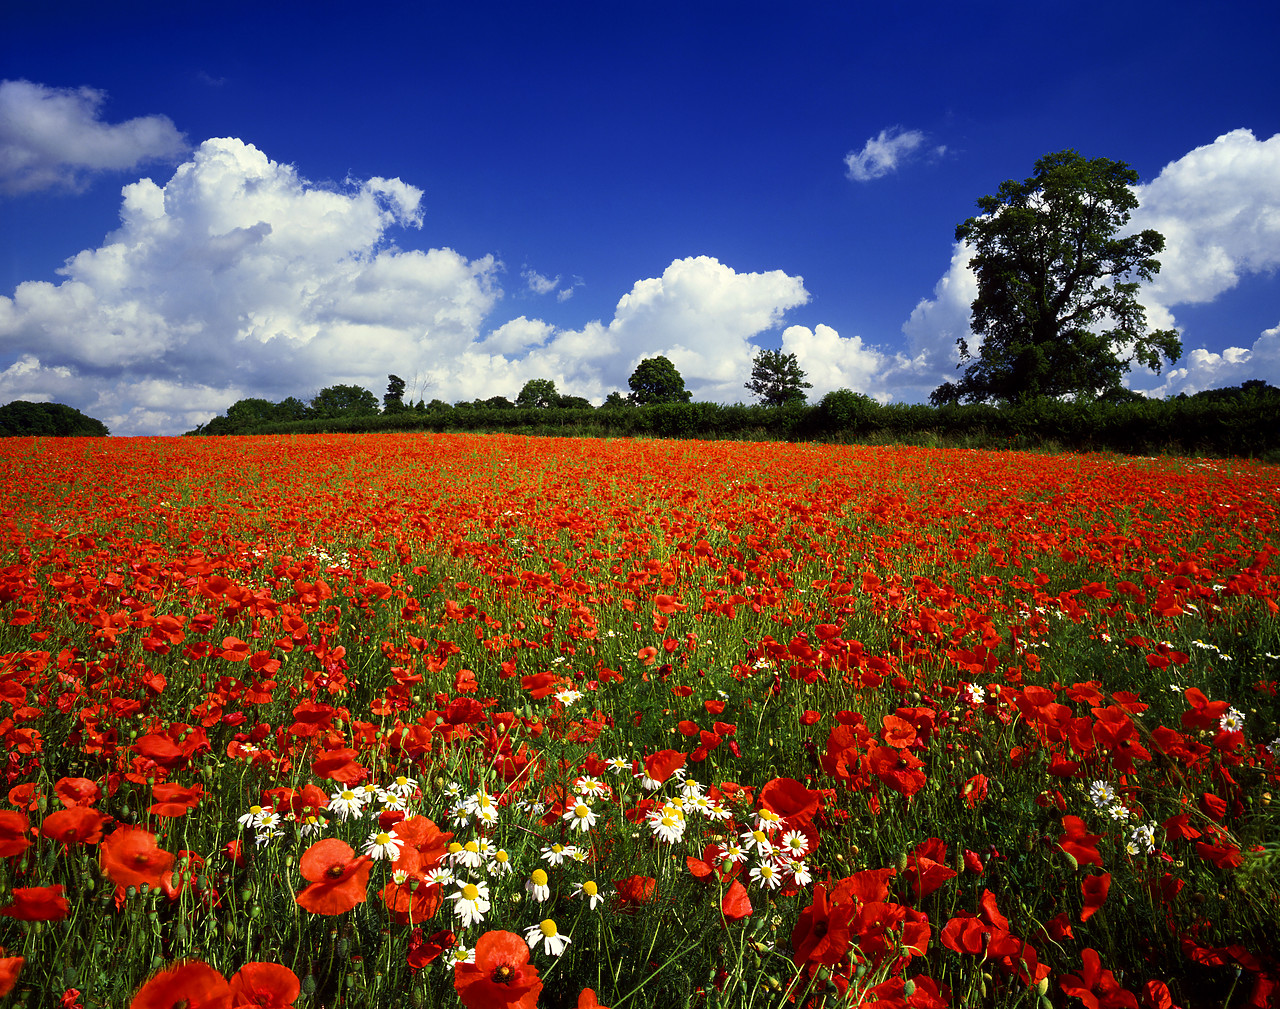 #881392-1 - Field of Poppies & Corn Daisies, Near Norwich, Norfolk, England